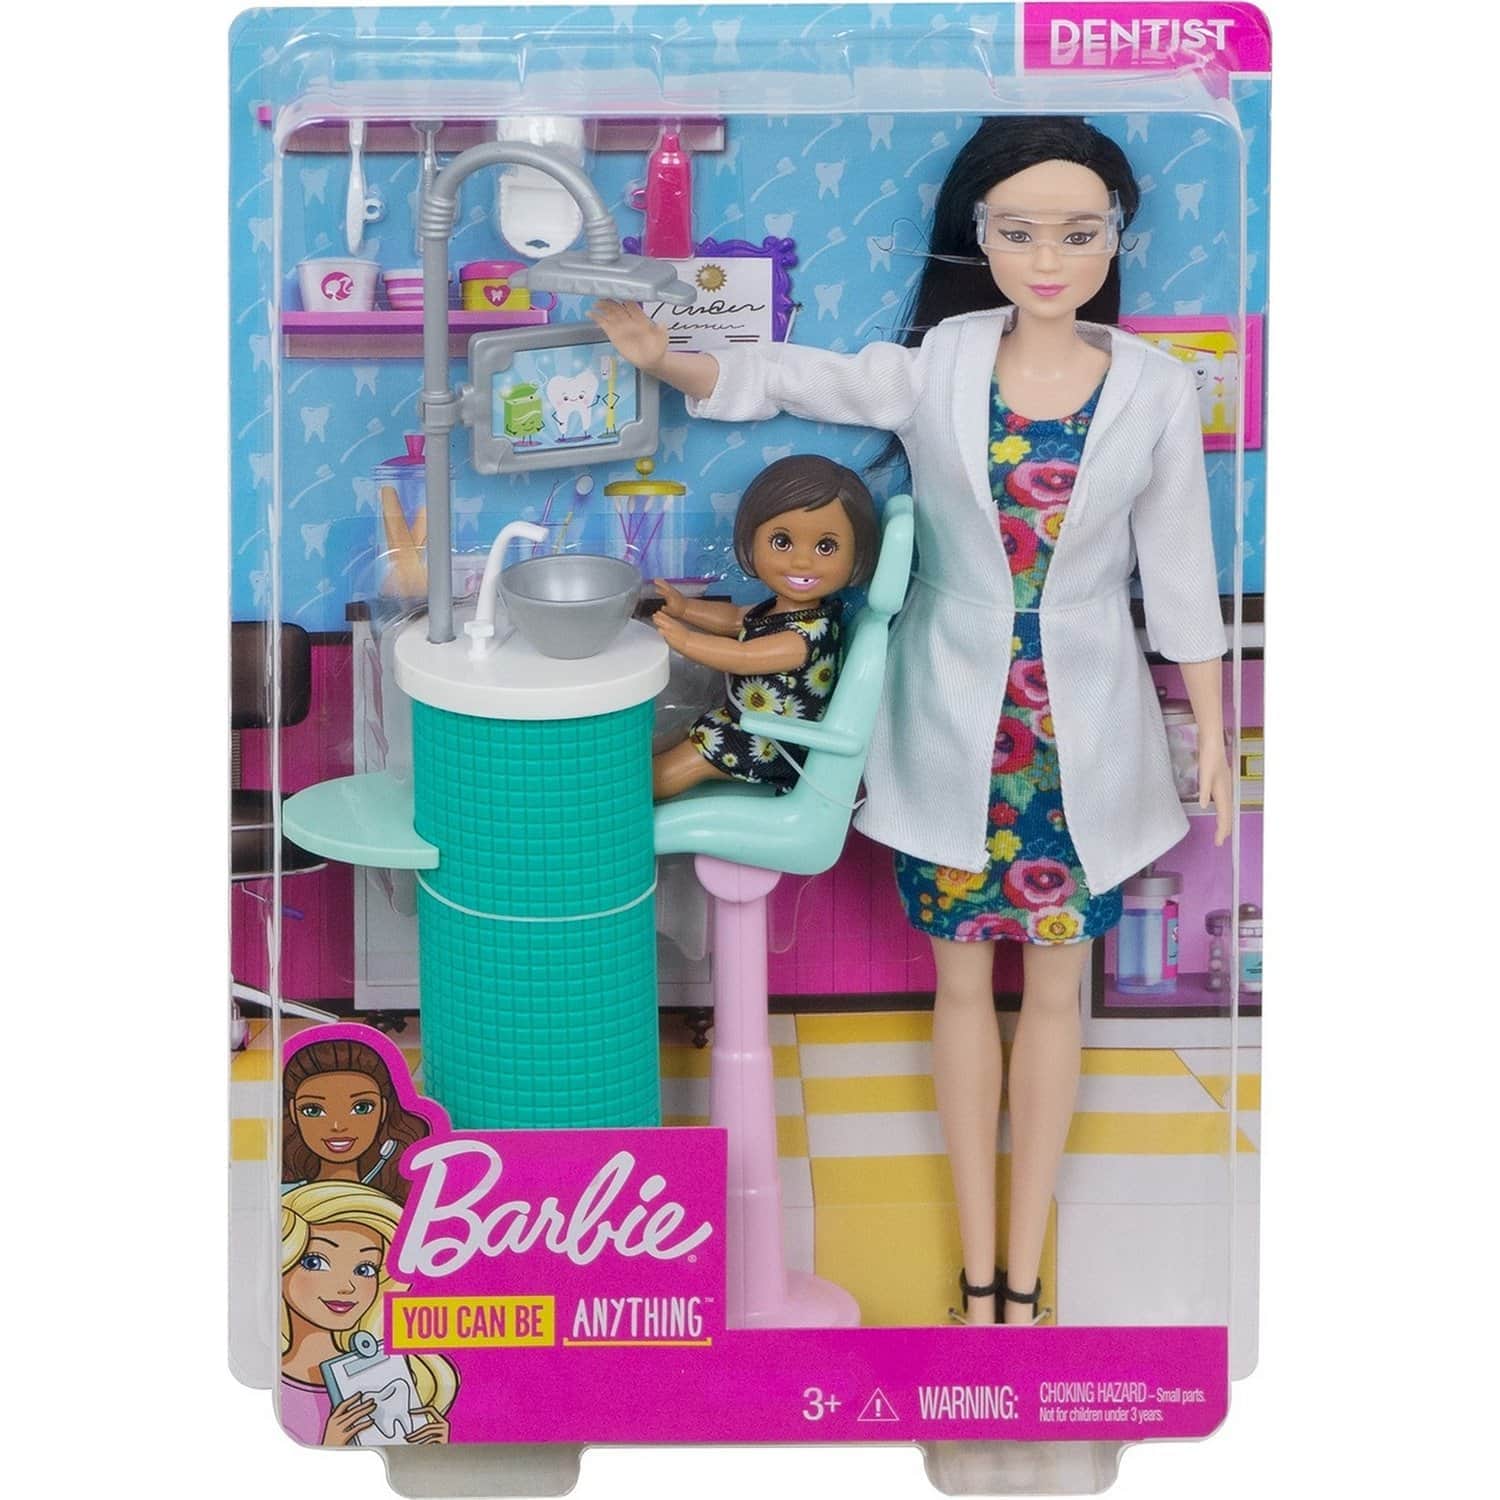 Набор Barbie Профессии Стоматолог Брюнетка, FXP17